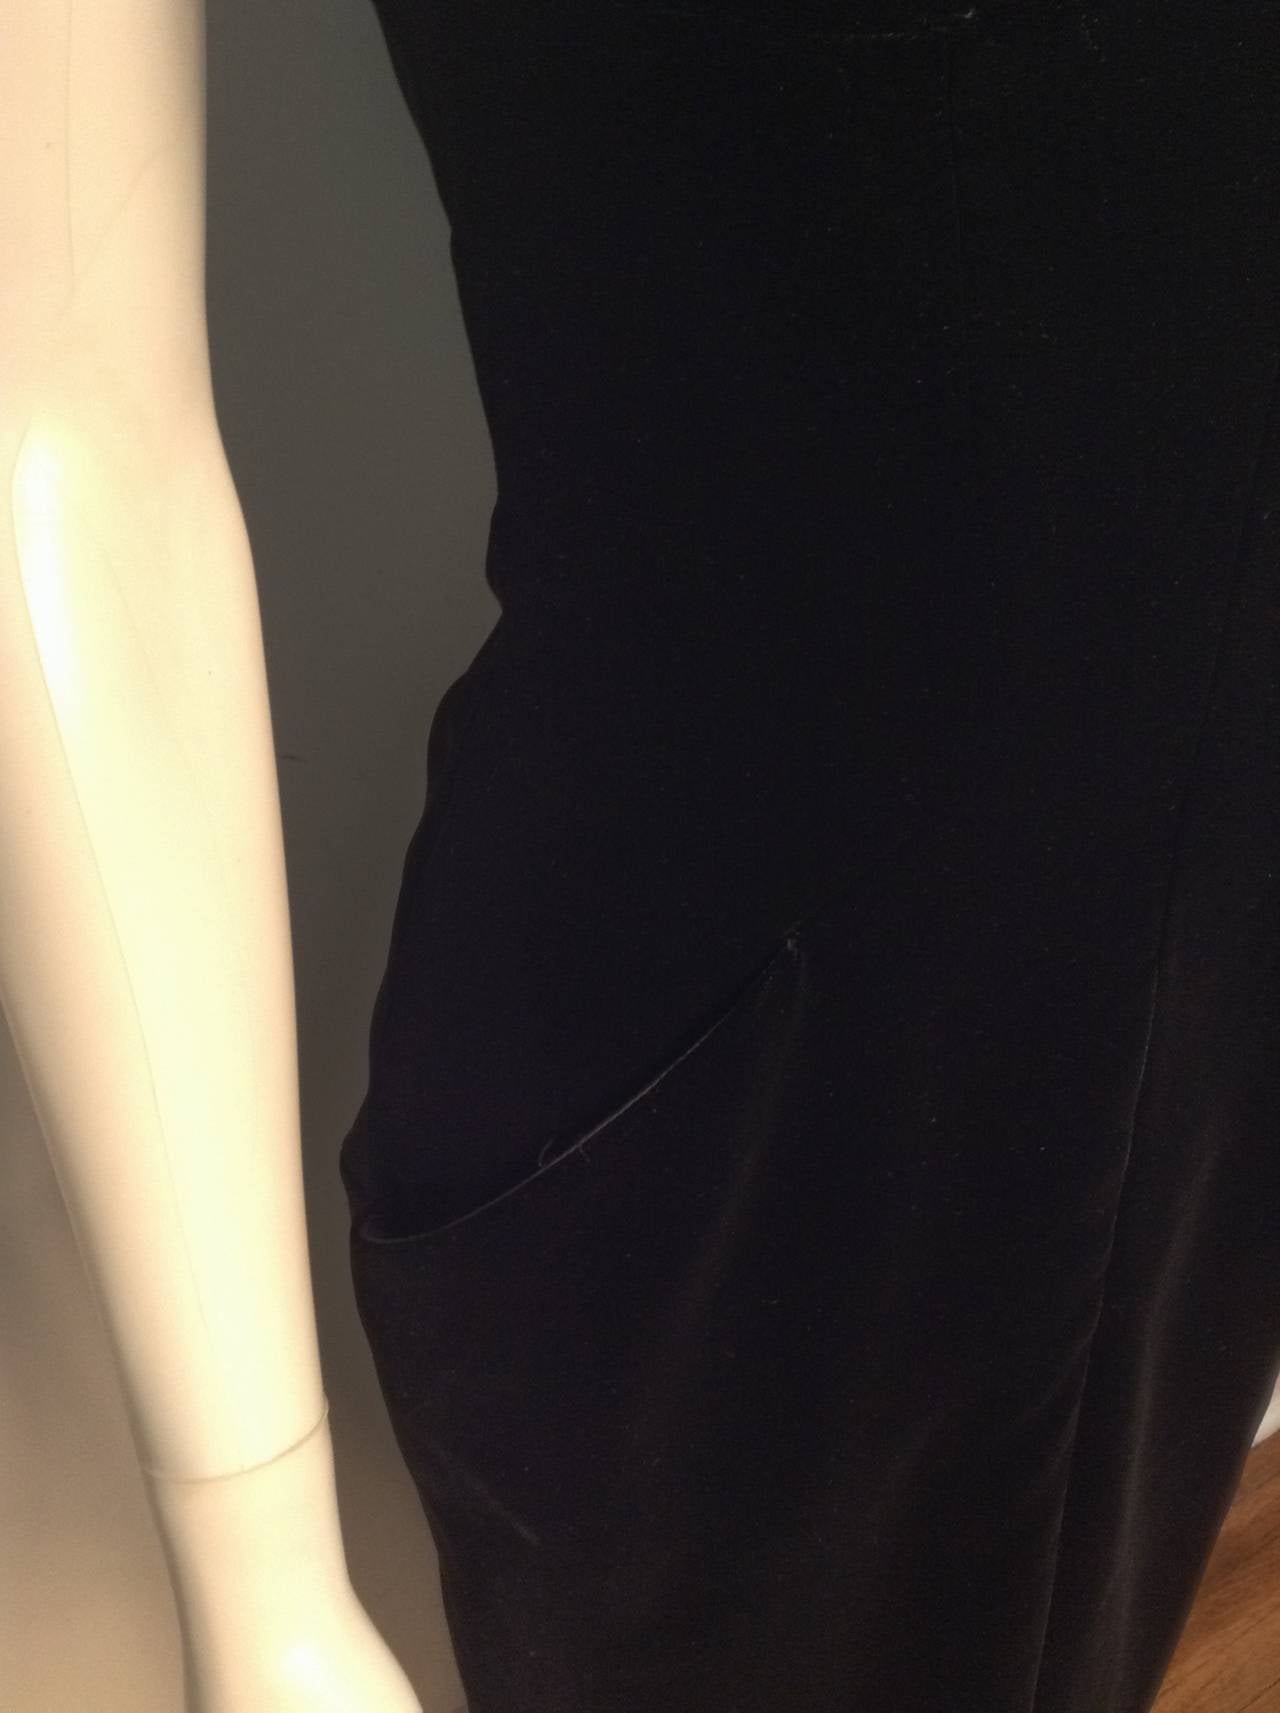 Tom Ford AW11 Black Velvet Cup Dress Unworn Size 2 2